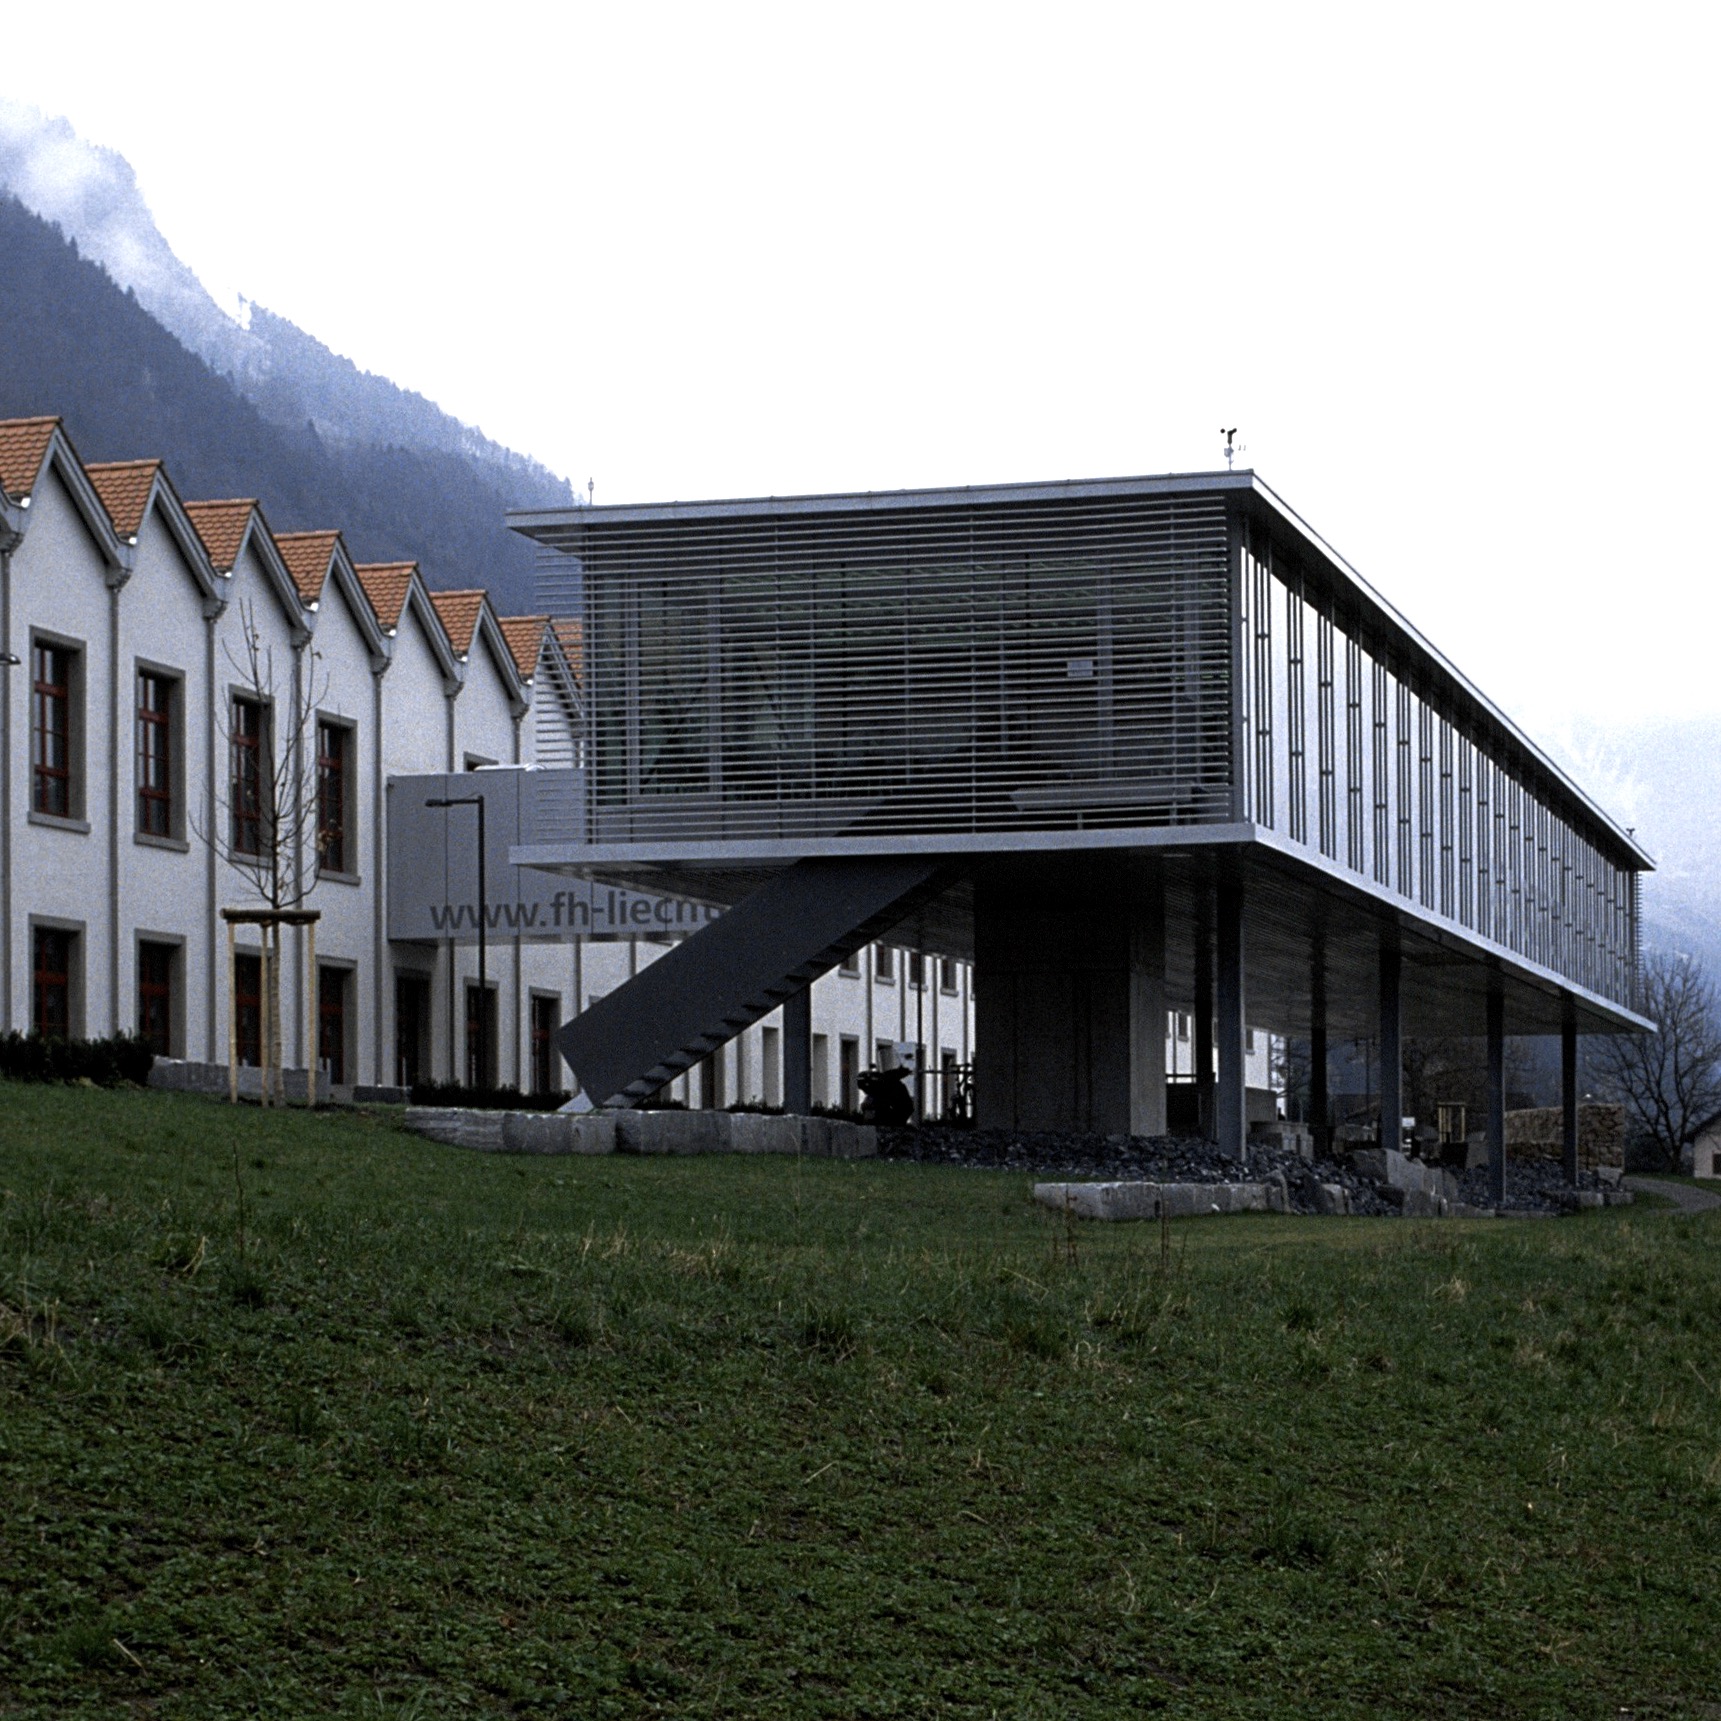 Universität Liechtenstein photograph © Thomas Deckker 2005